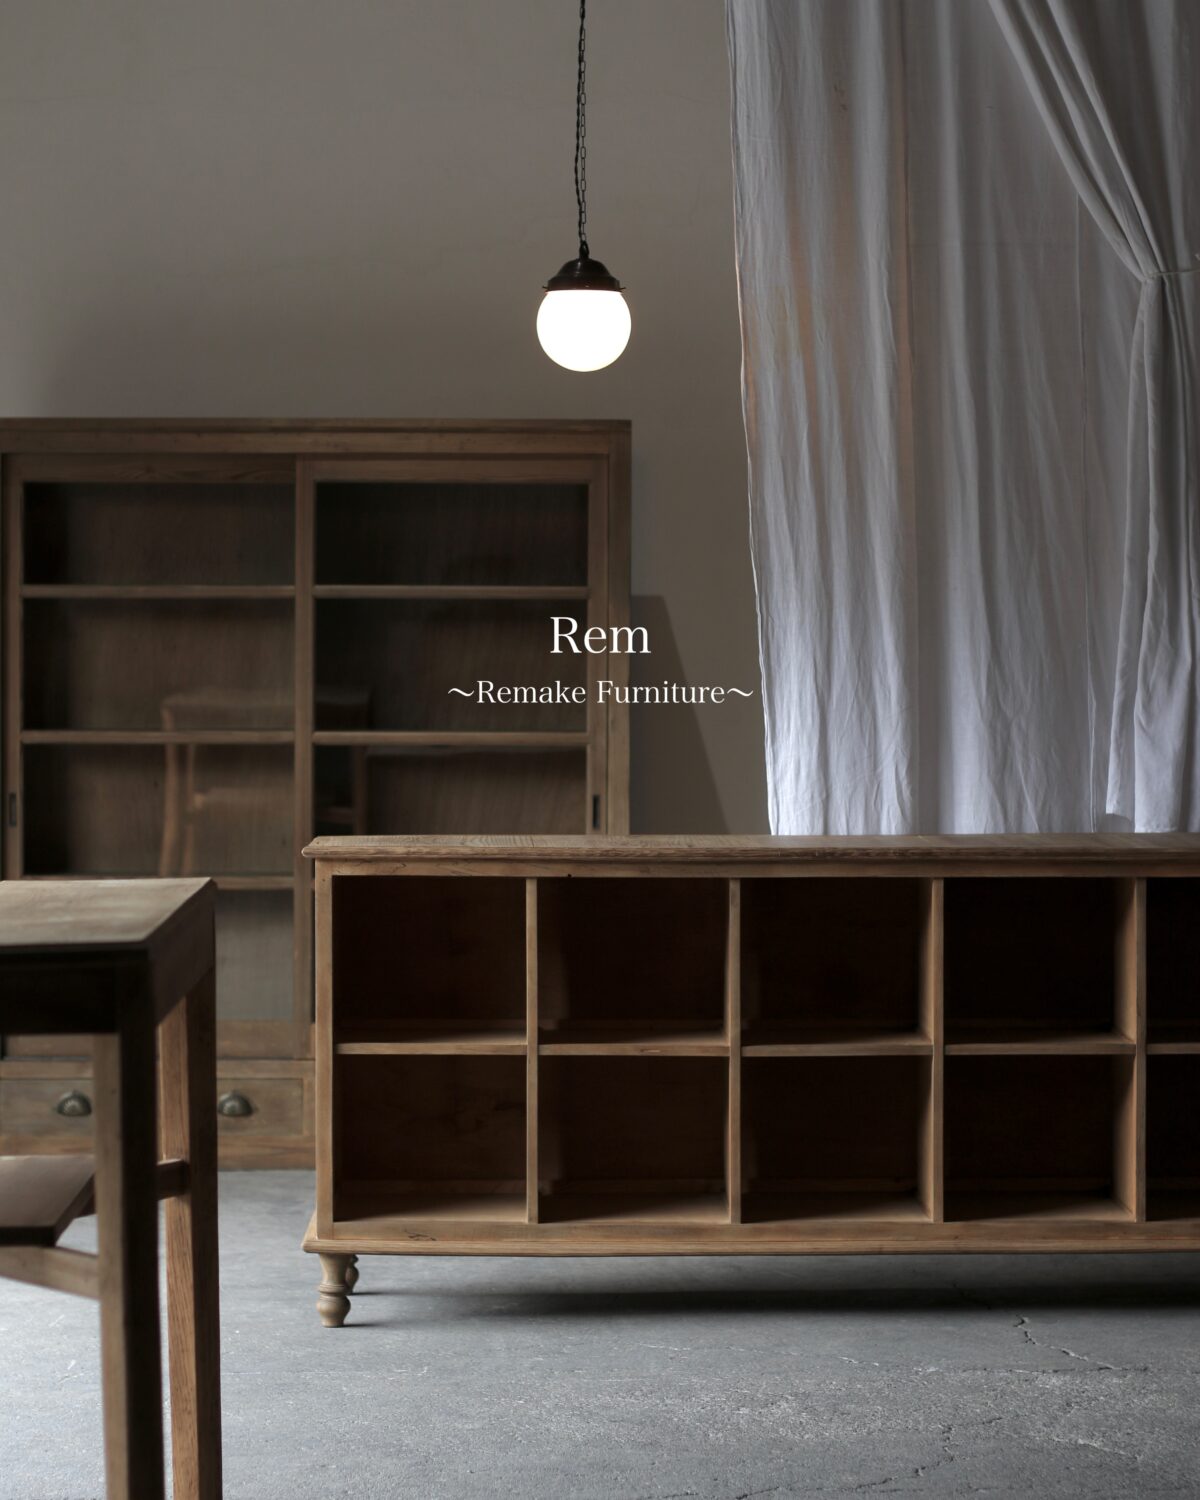 Rem Remake Furnitureの画像